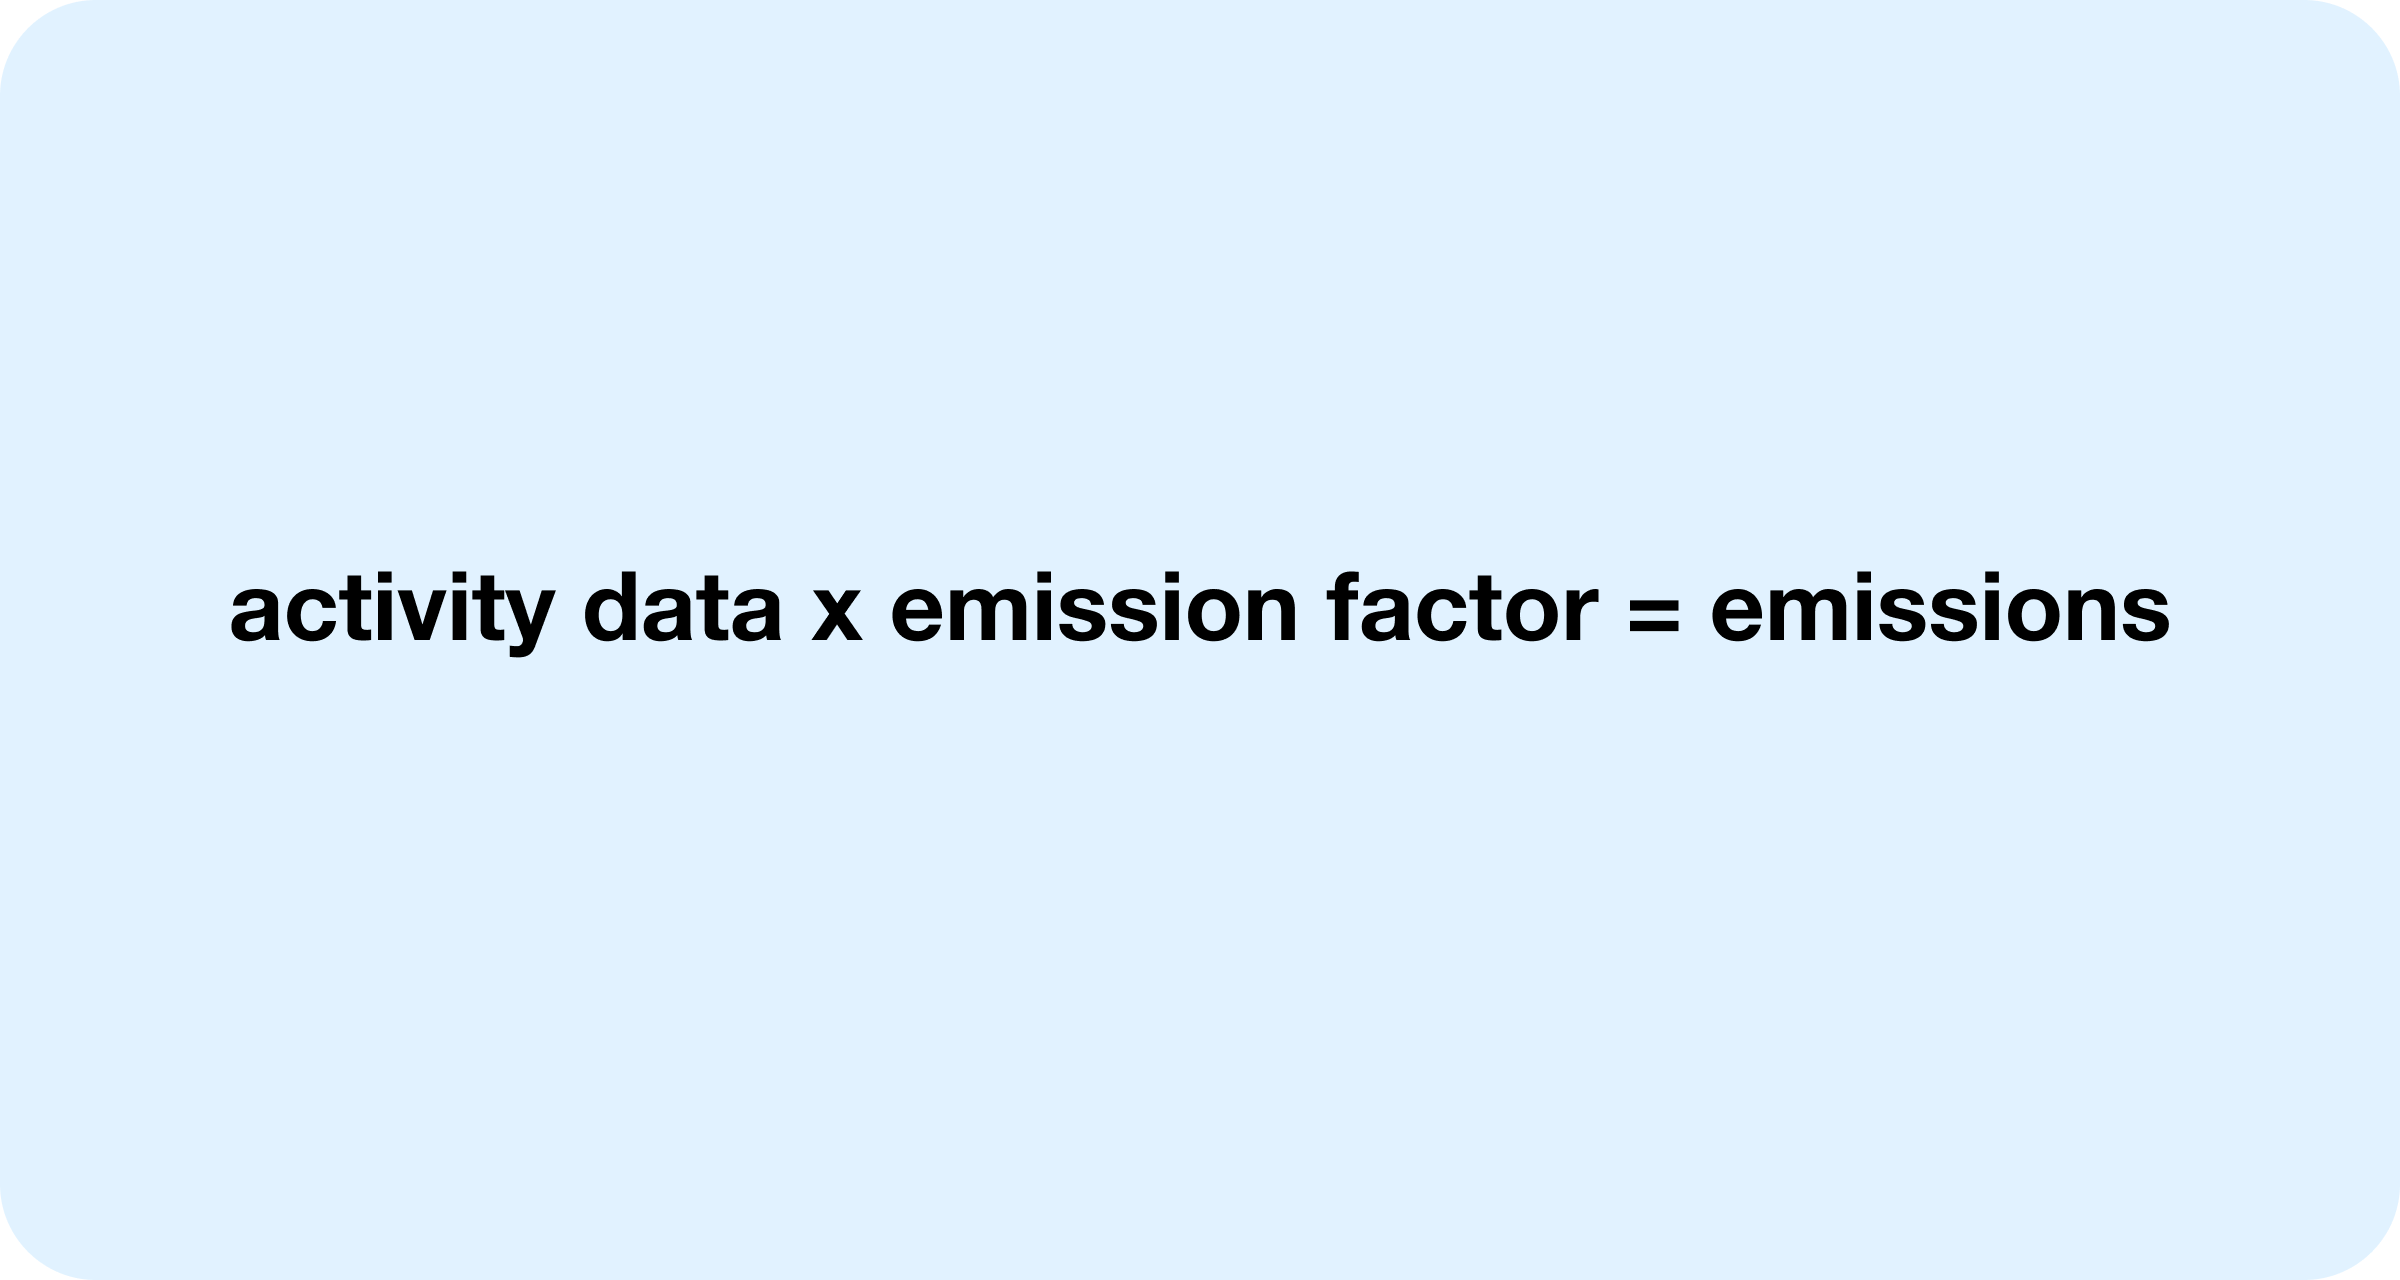 Activity data x emissions factor = emissions